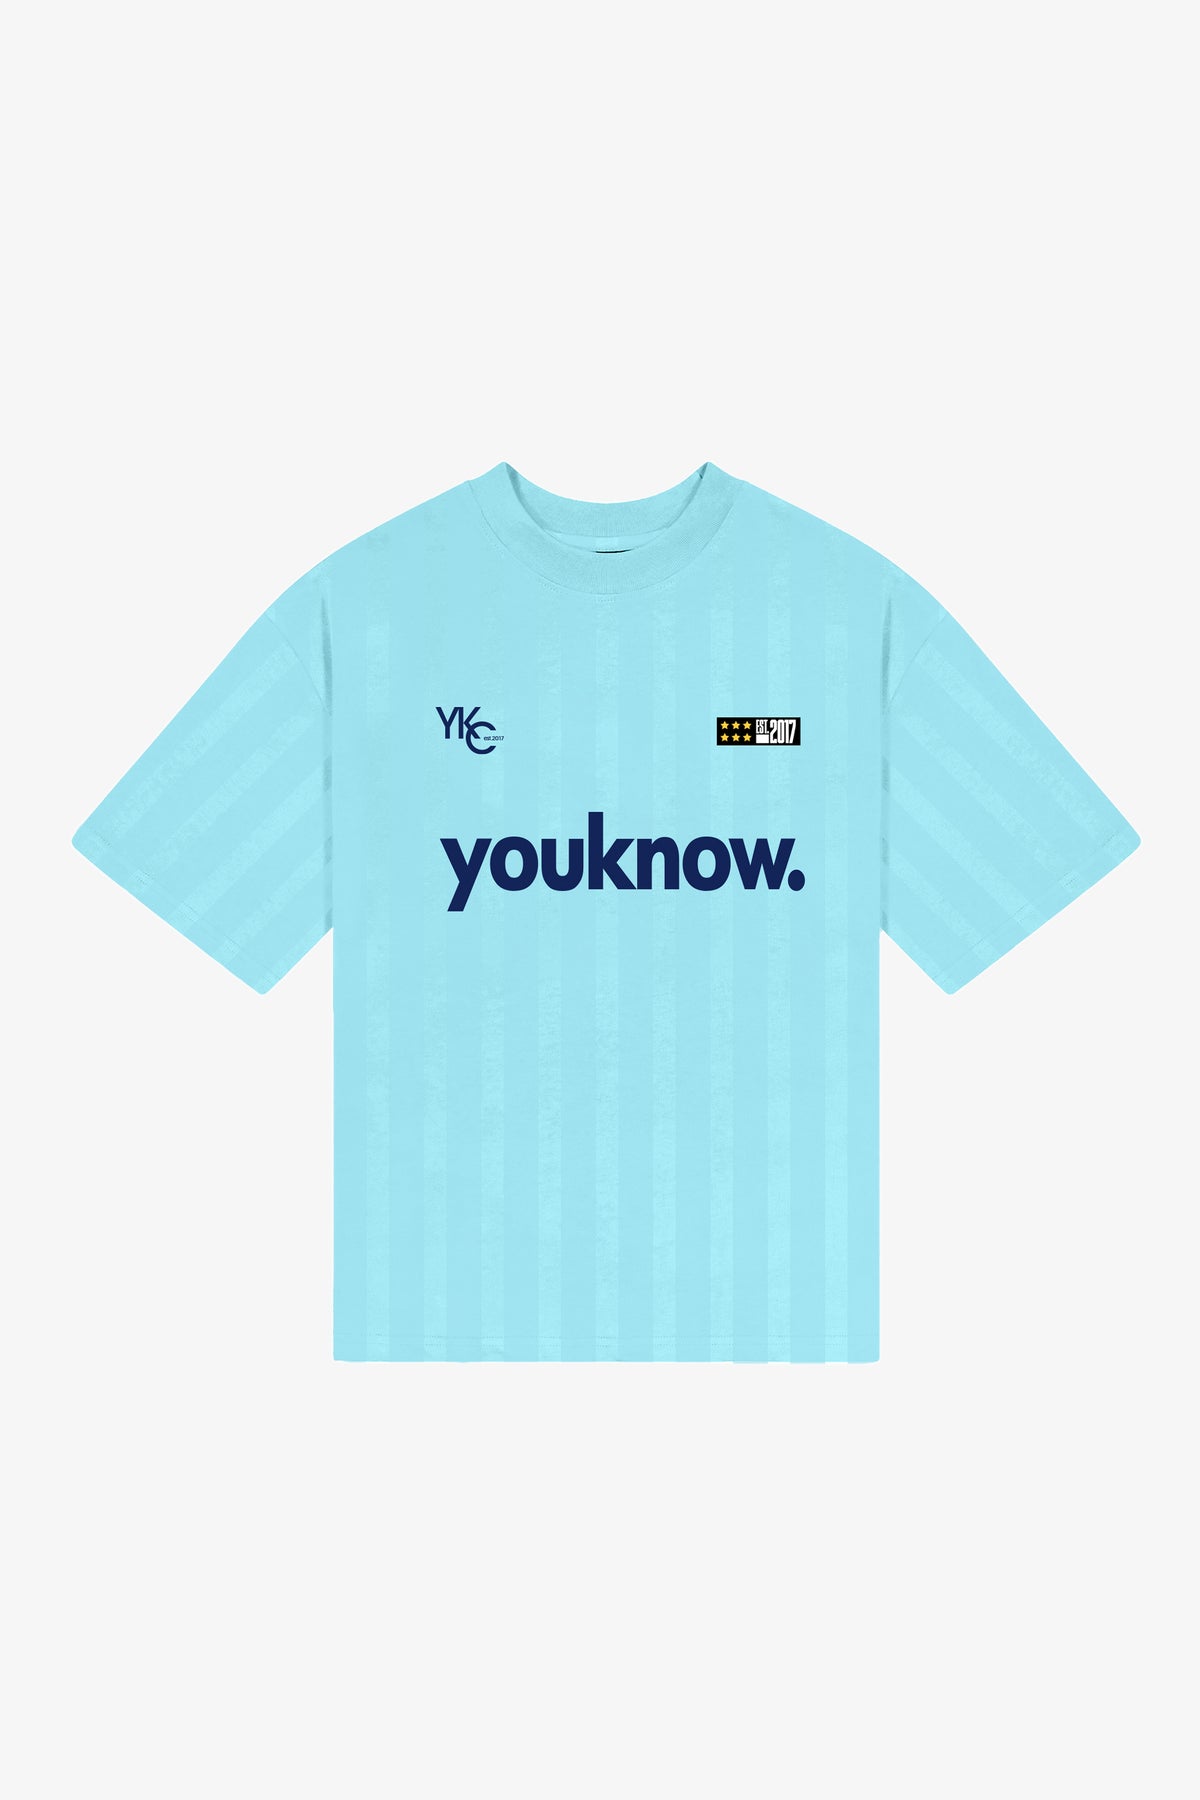 YK. FC JERSEY | BABY BLUE